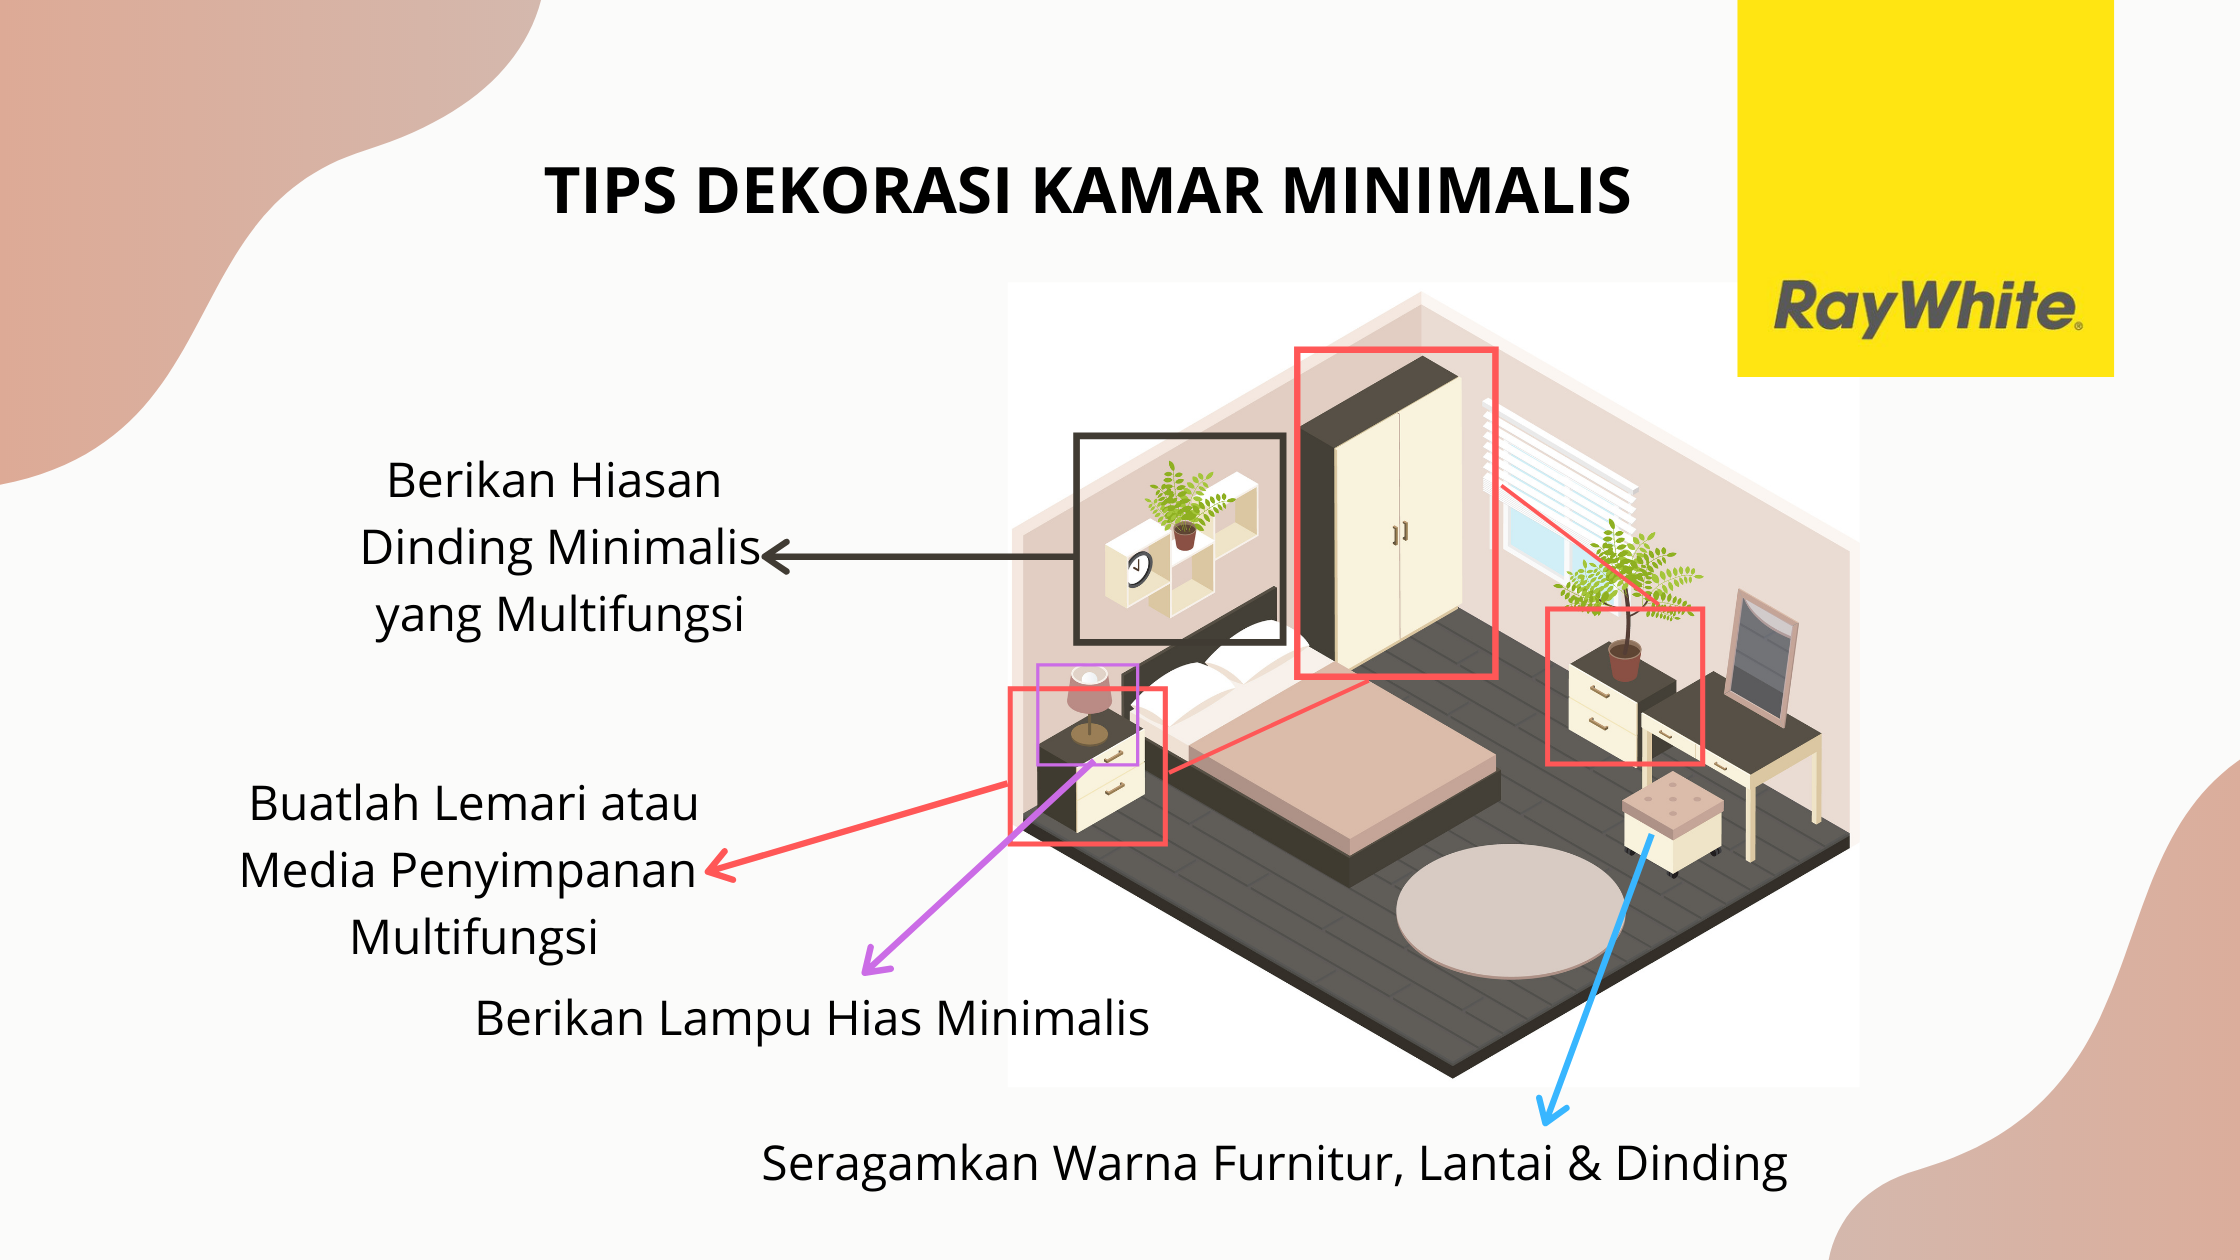 Tips-Dekorasi-Kamar-Minimalis-Desain-Kamar-Minimalis-2020-Ray-White-Agen-Properti Terbaik-Indonesia